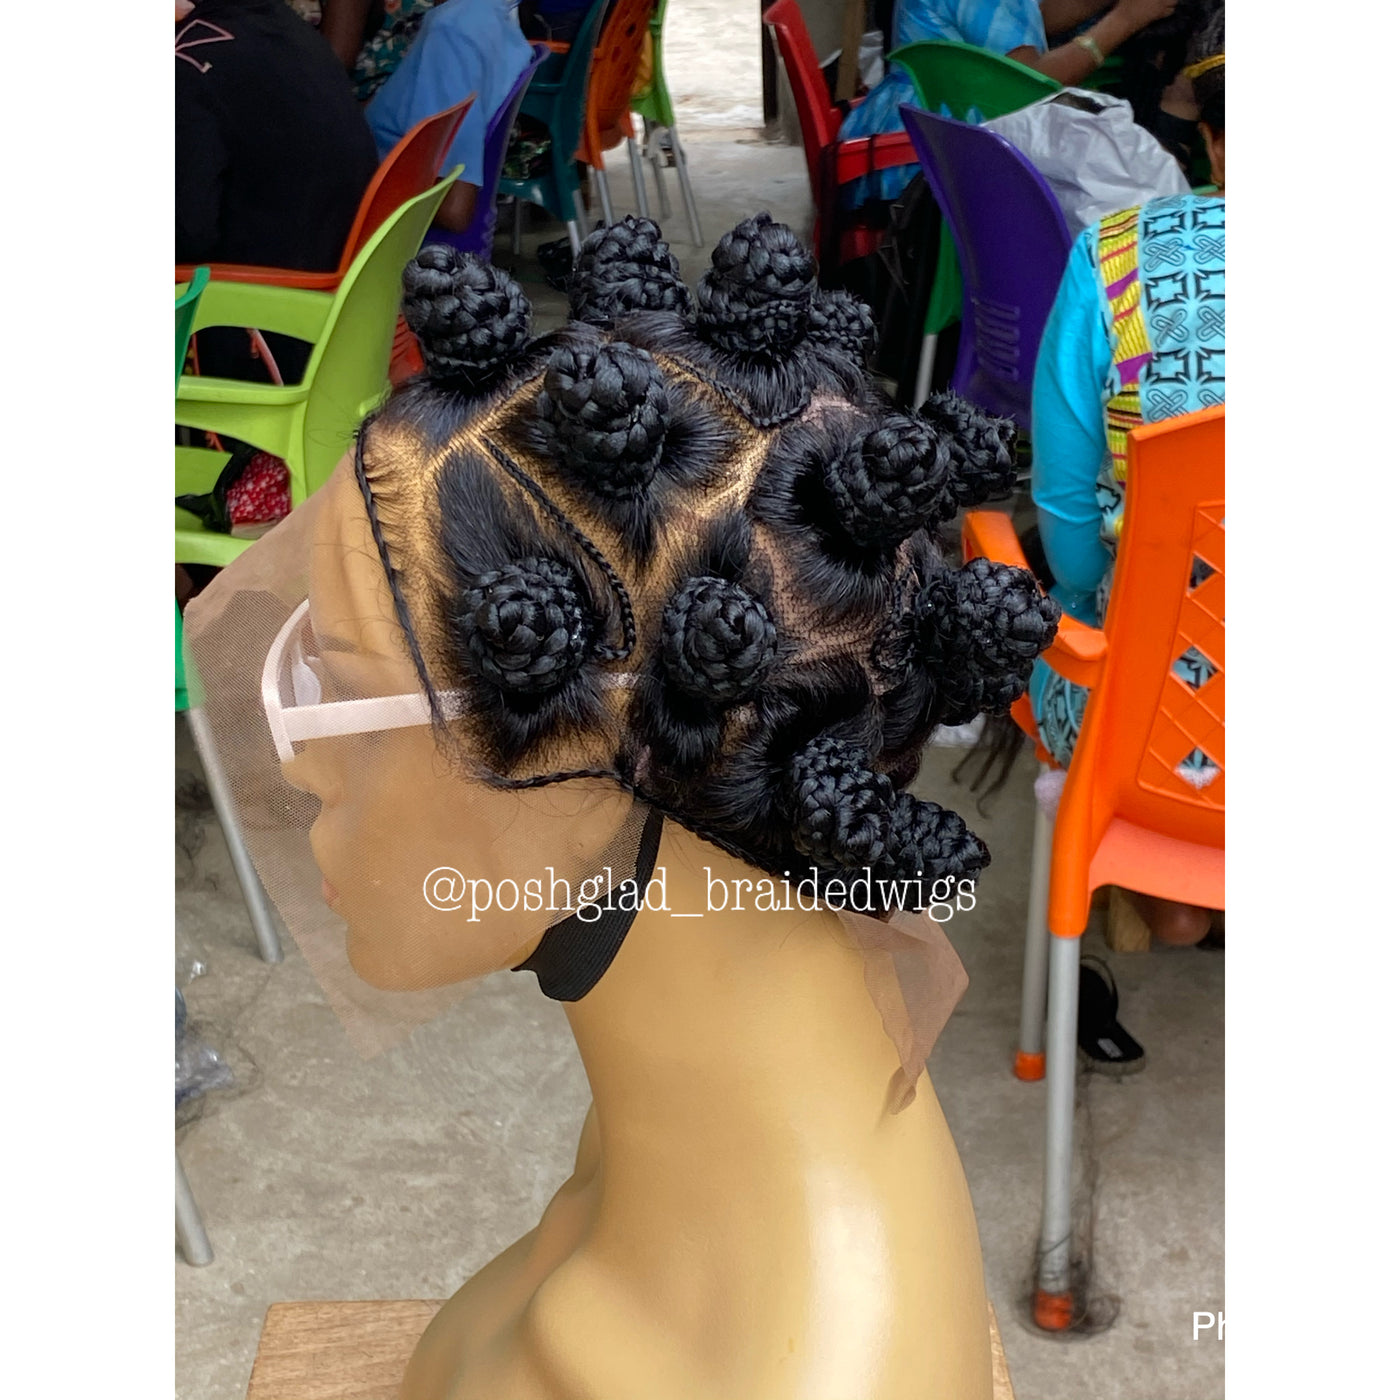 Bantu Knots Wig - Joanne Poshglad Braided Wigs Bantu Knots Braided Wig